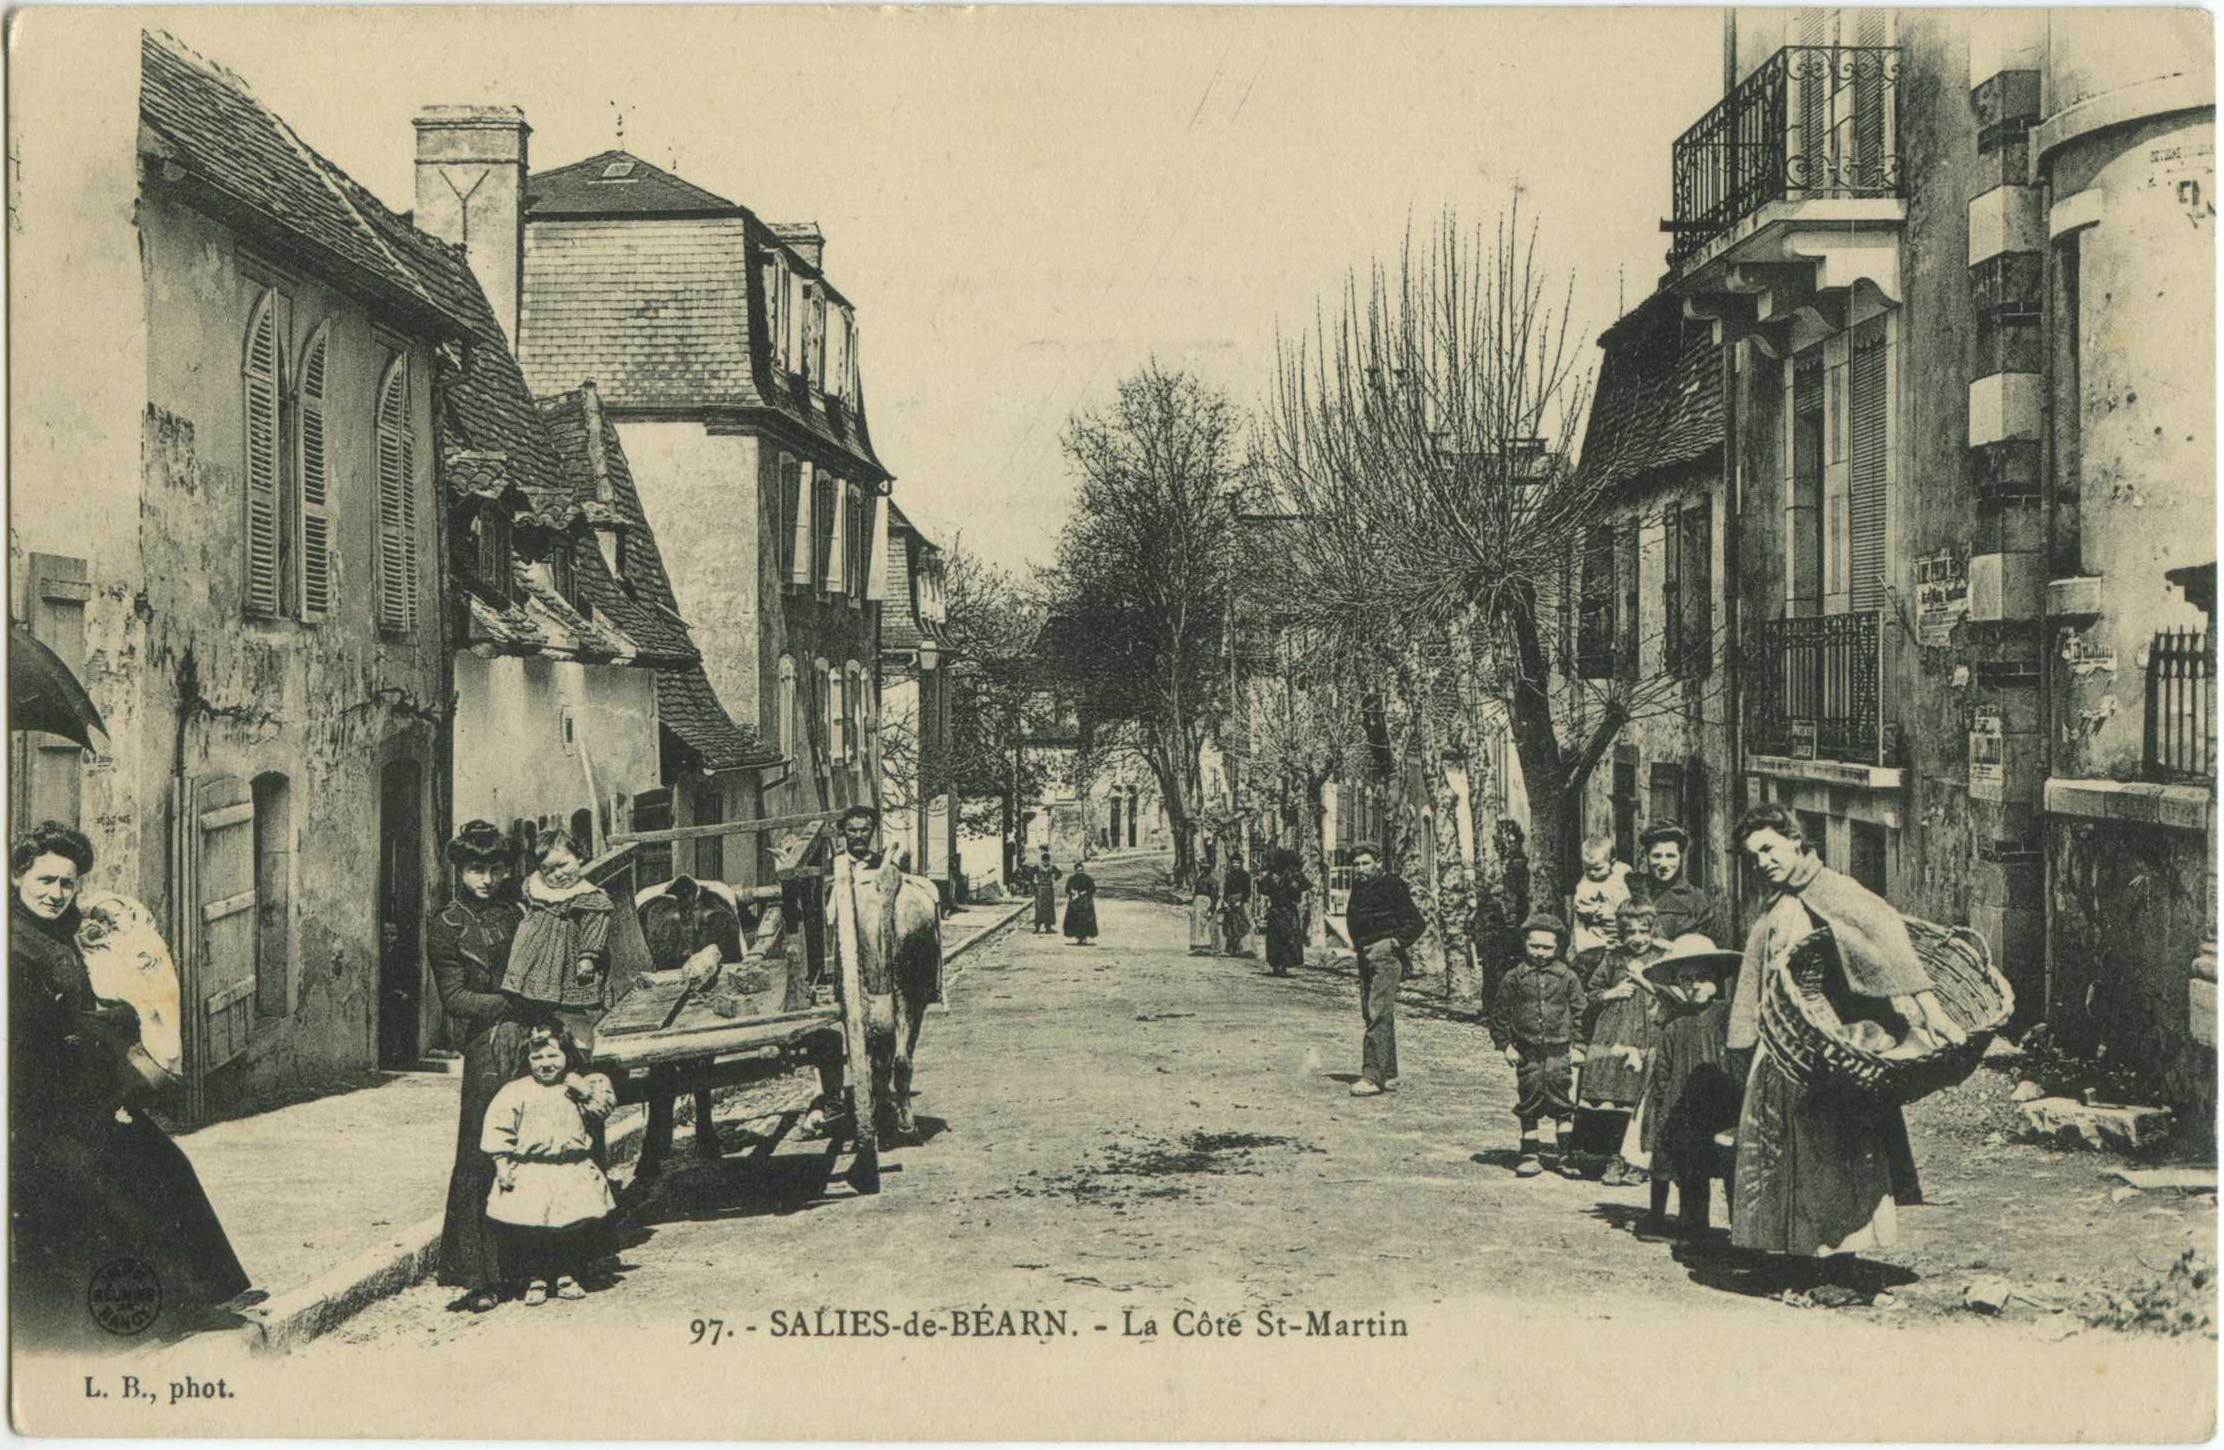 Salies-de-Béarn - La Côte St-Martin